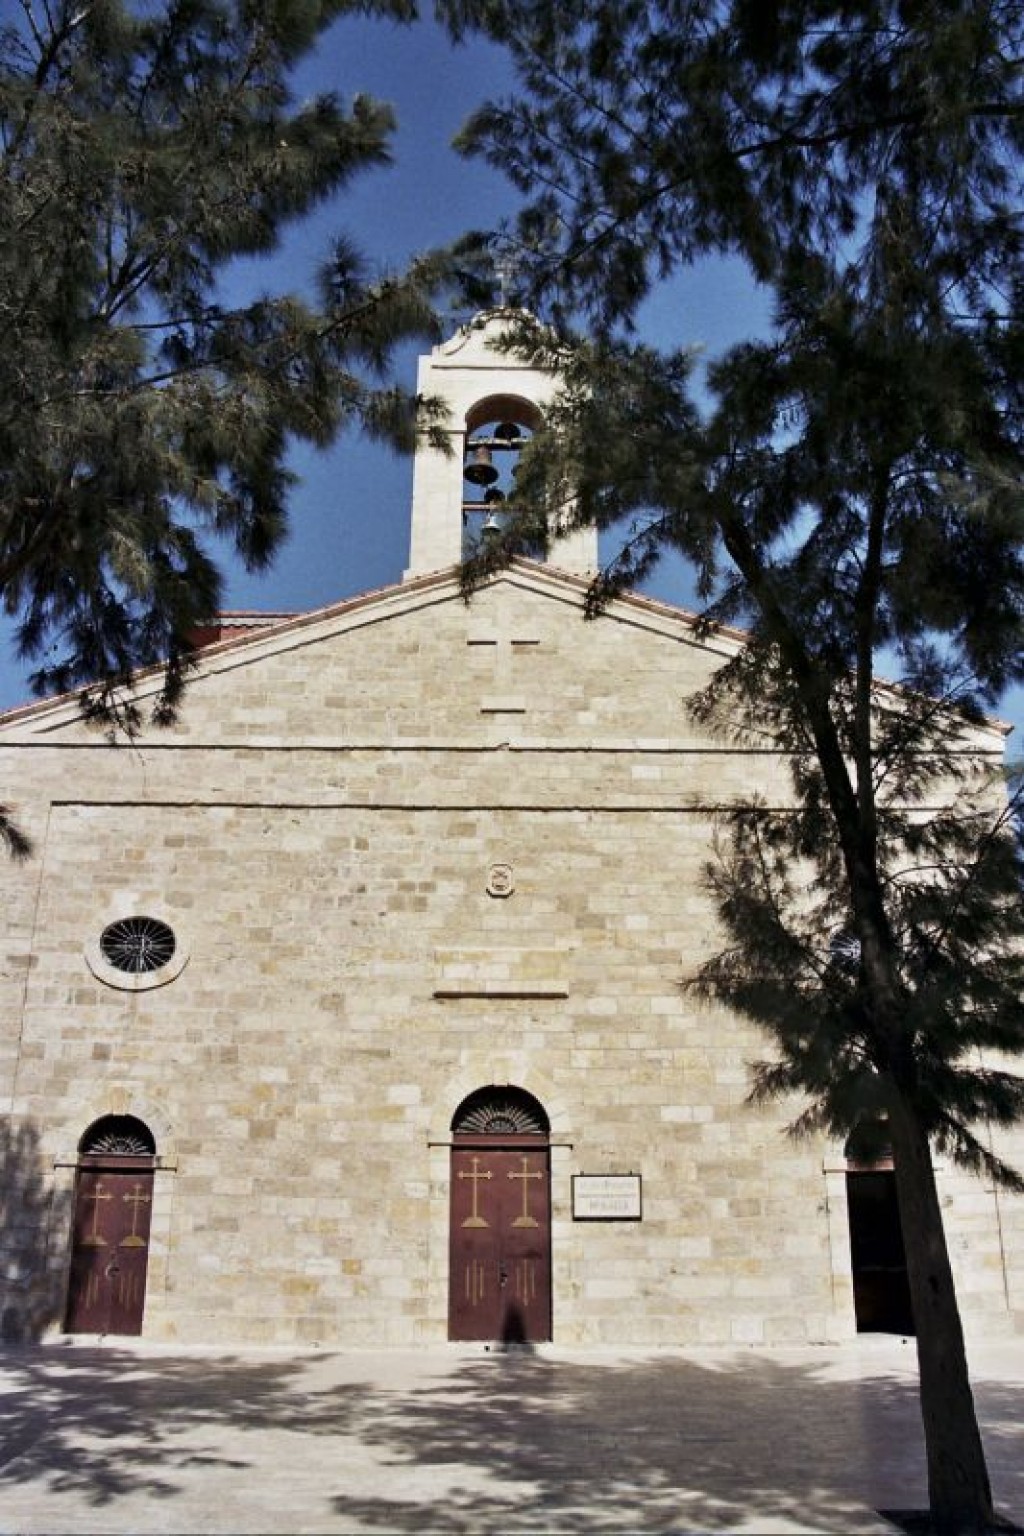 We visited St Georges Church, a Greek Orthodox Church.